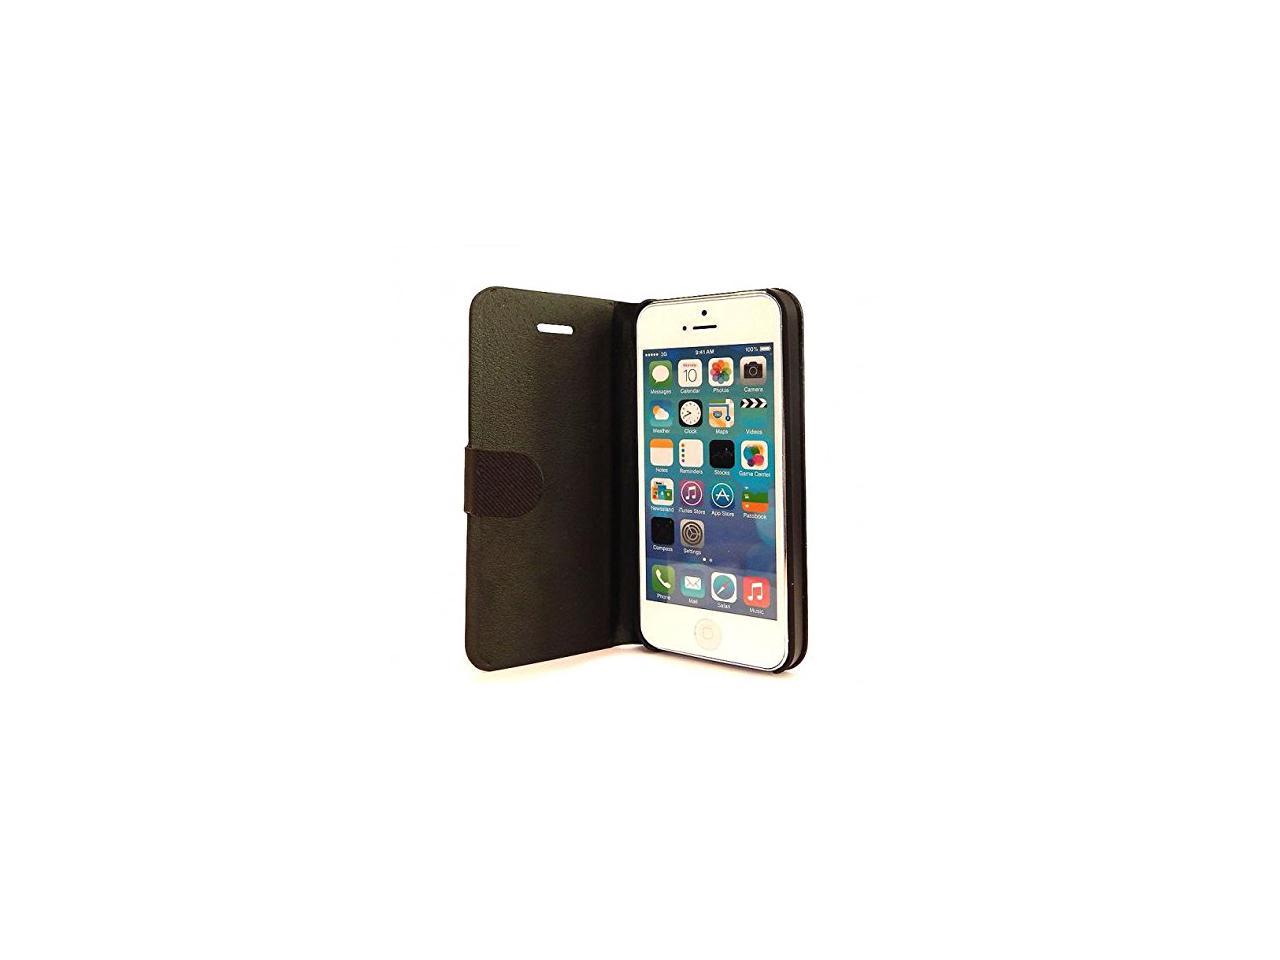 NEON Black iPhone 5 Flip Cover with Auto-Sleep Function Model IPH5-FLI-BK